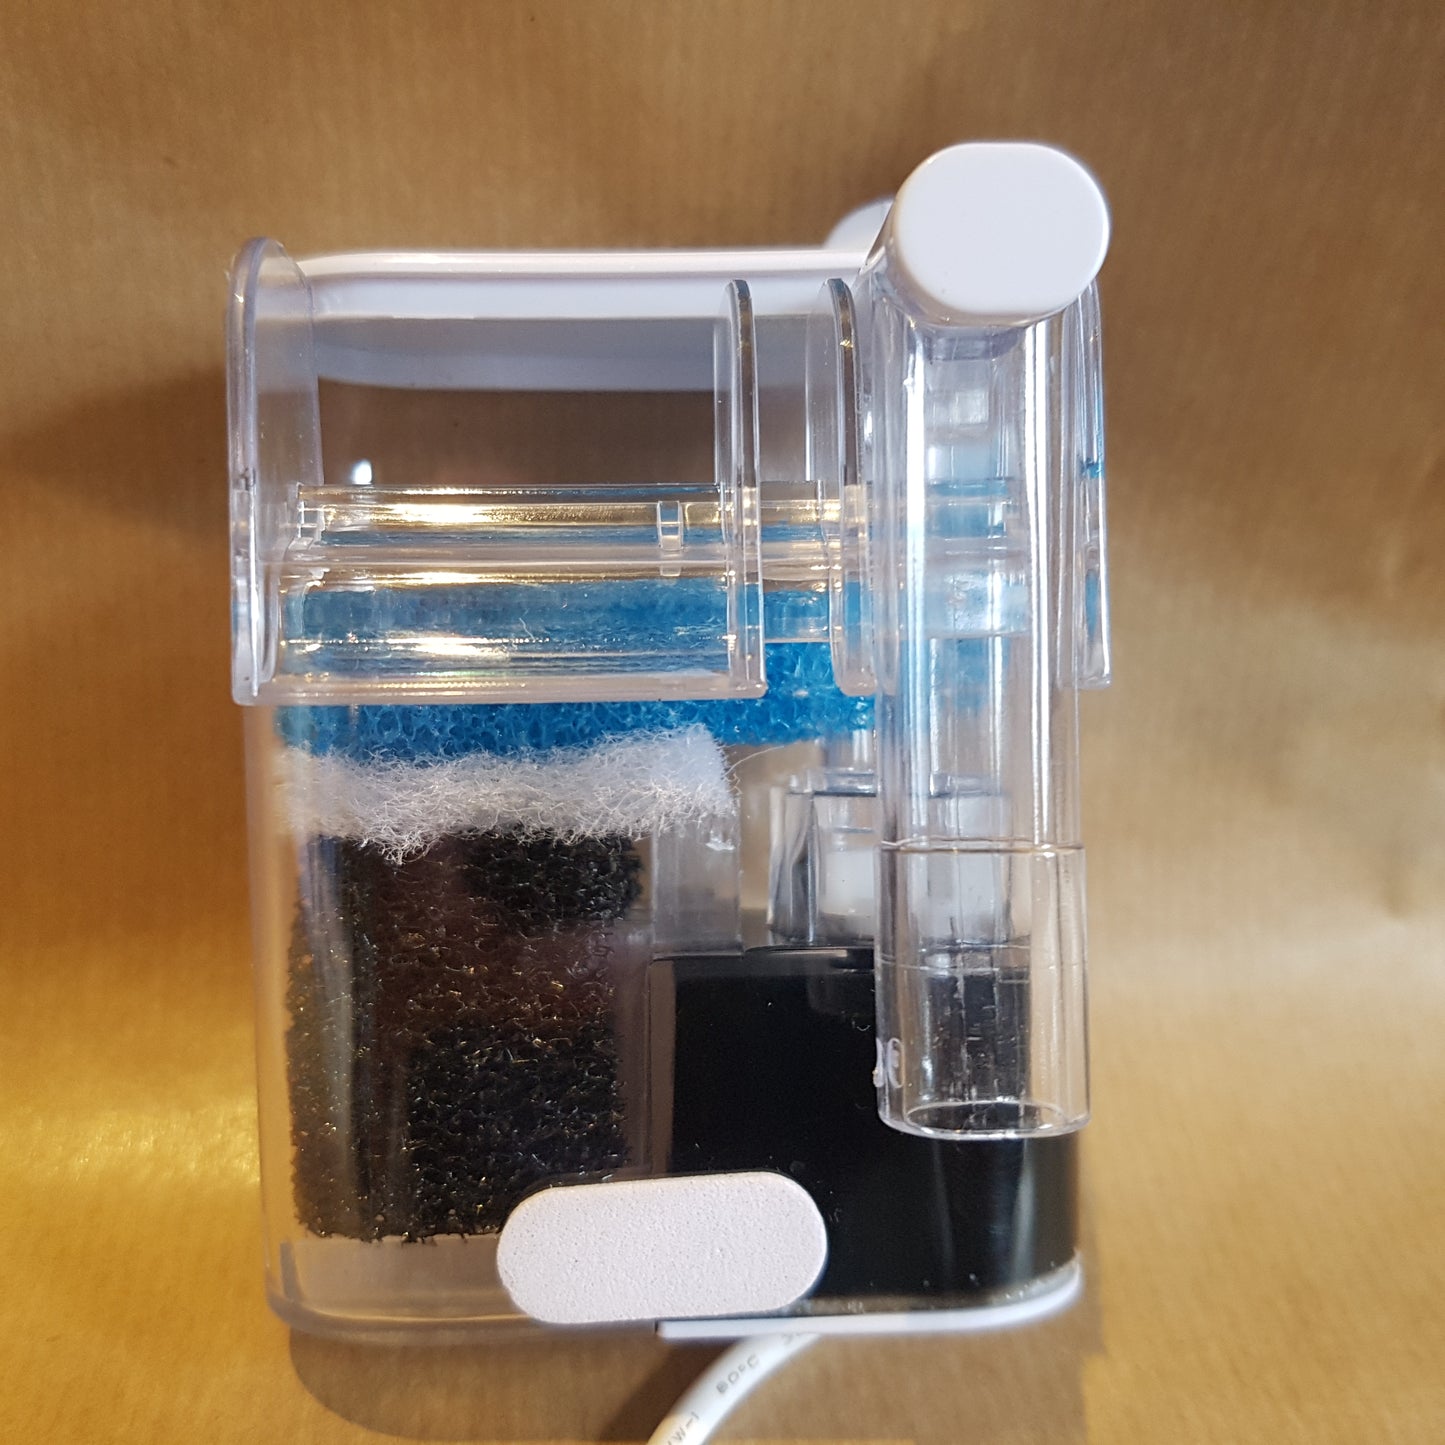 Hang on back filter - for small nano aquarium